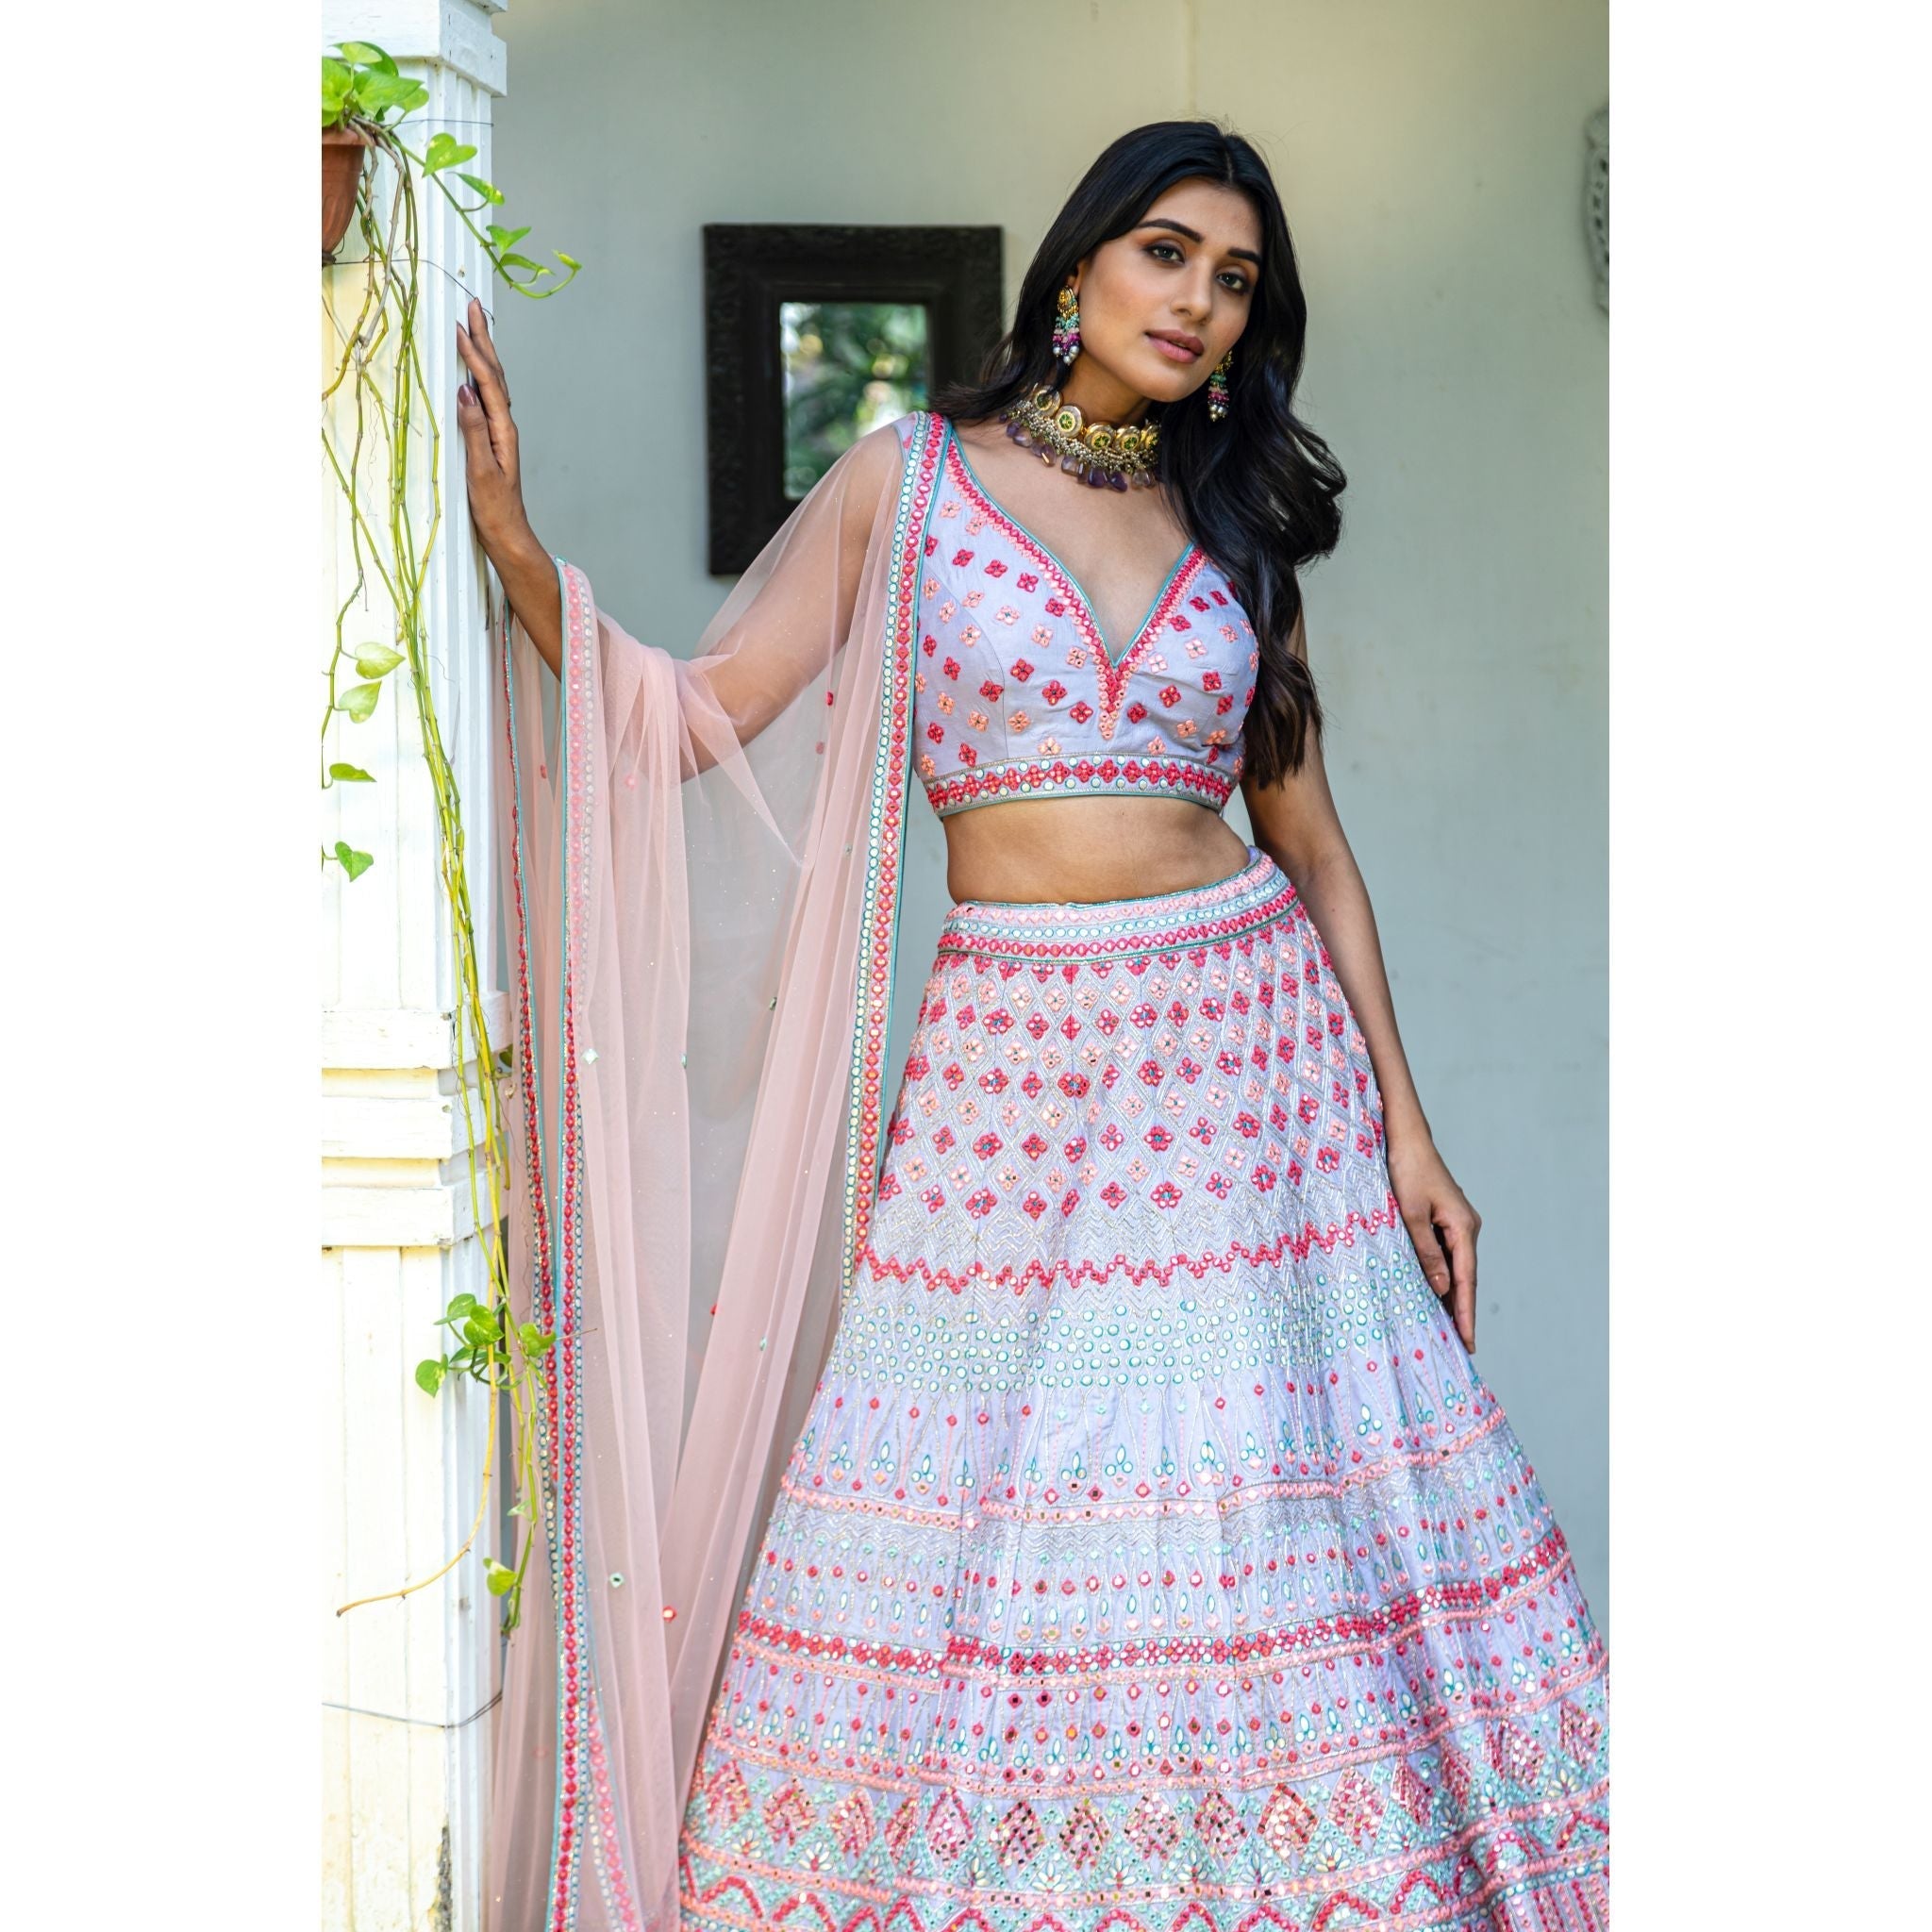 Lavender Multicolored Mirrorwork Lehenga Set - Indian Designer Bridal Wedding Outfit